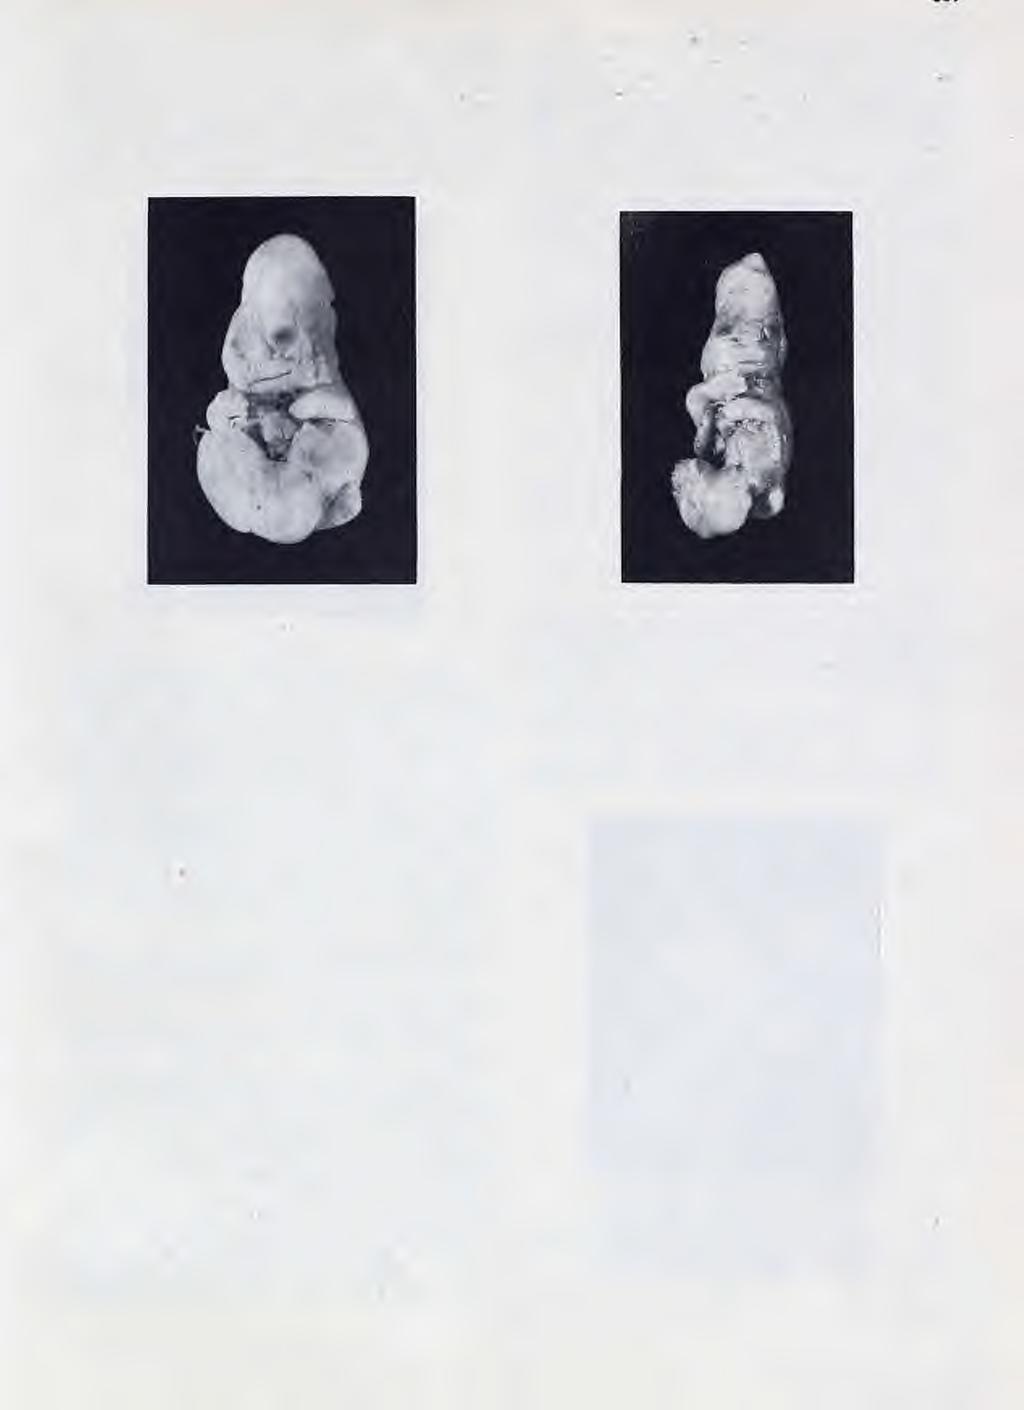 Werth dijeli vanmaterične višestruke trudnoće (»Mehrlingsschwangerschaft«) u tri grupe.